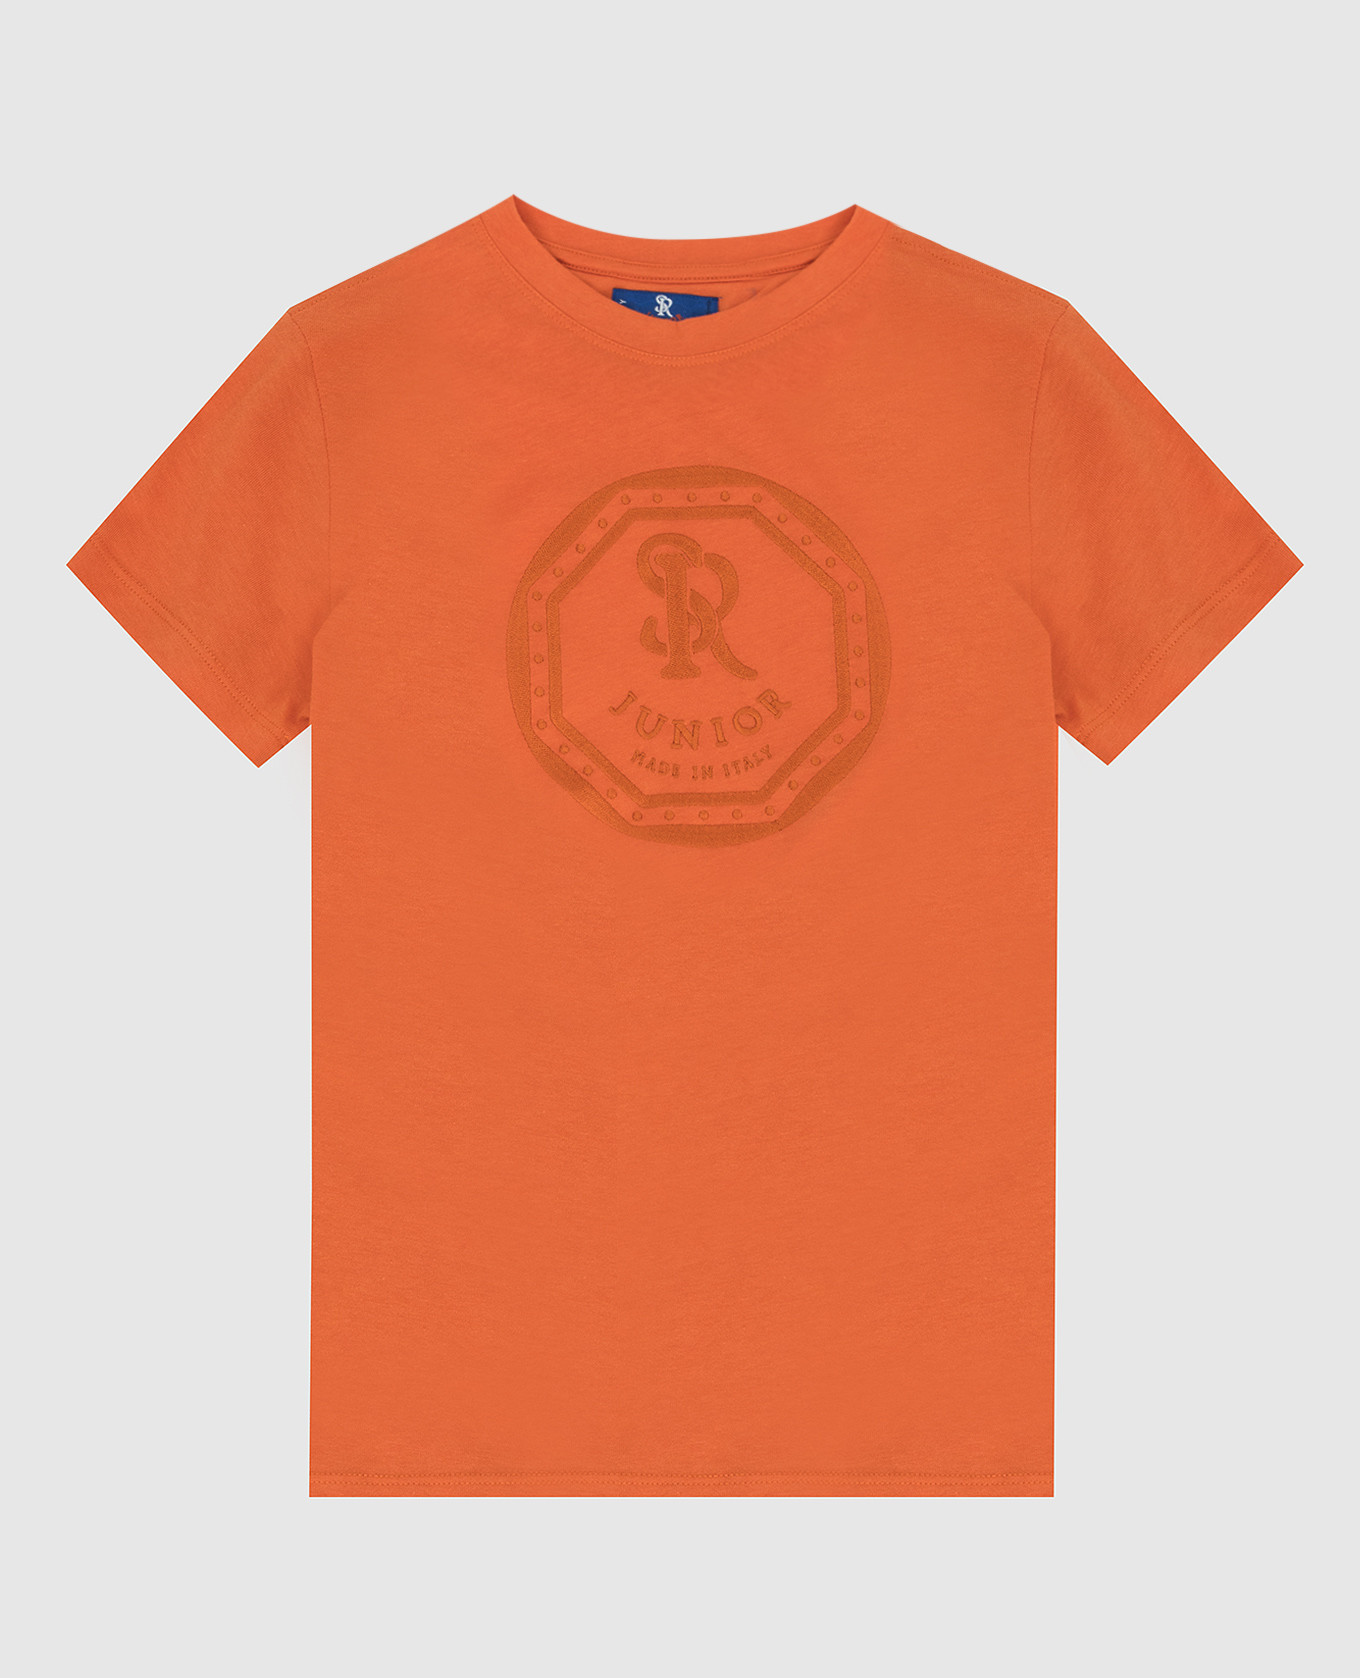 Children's orange t-shirt with emblem embroidery